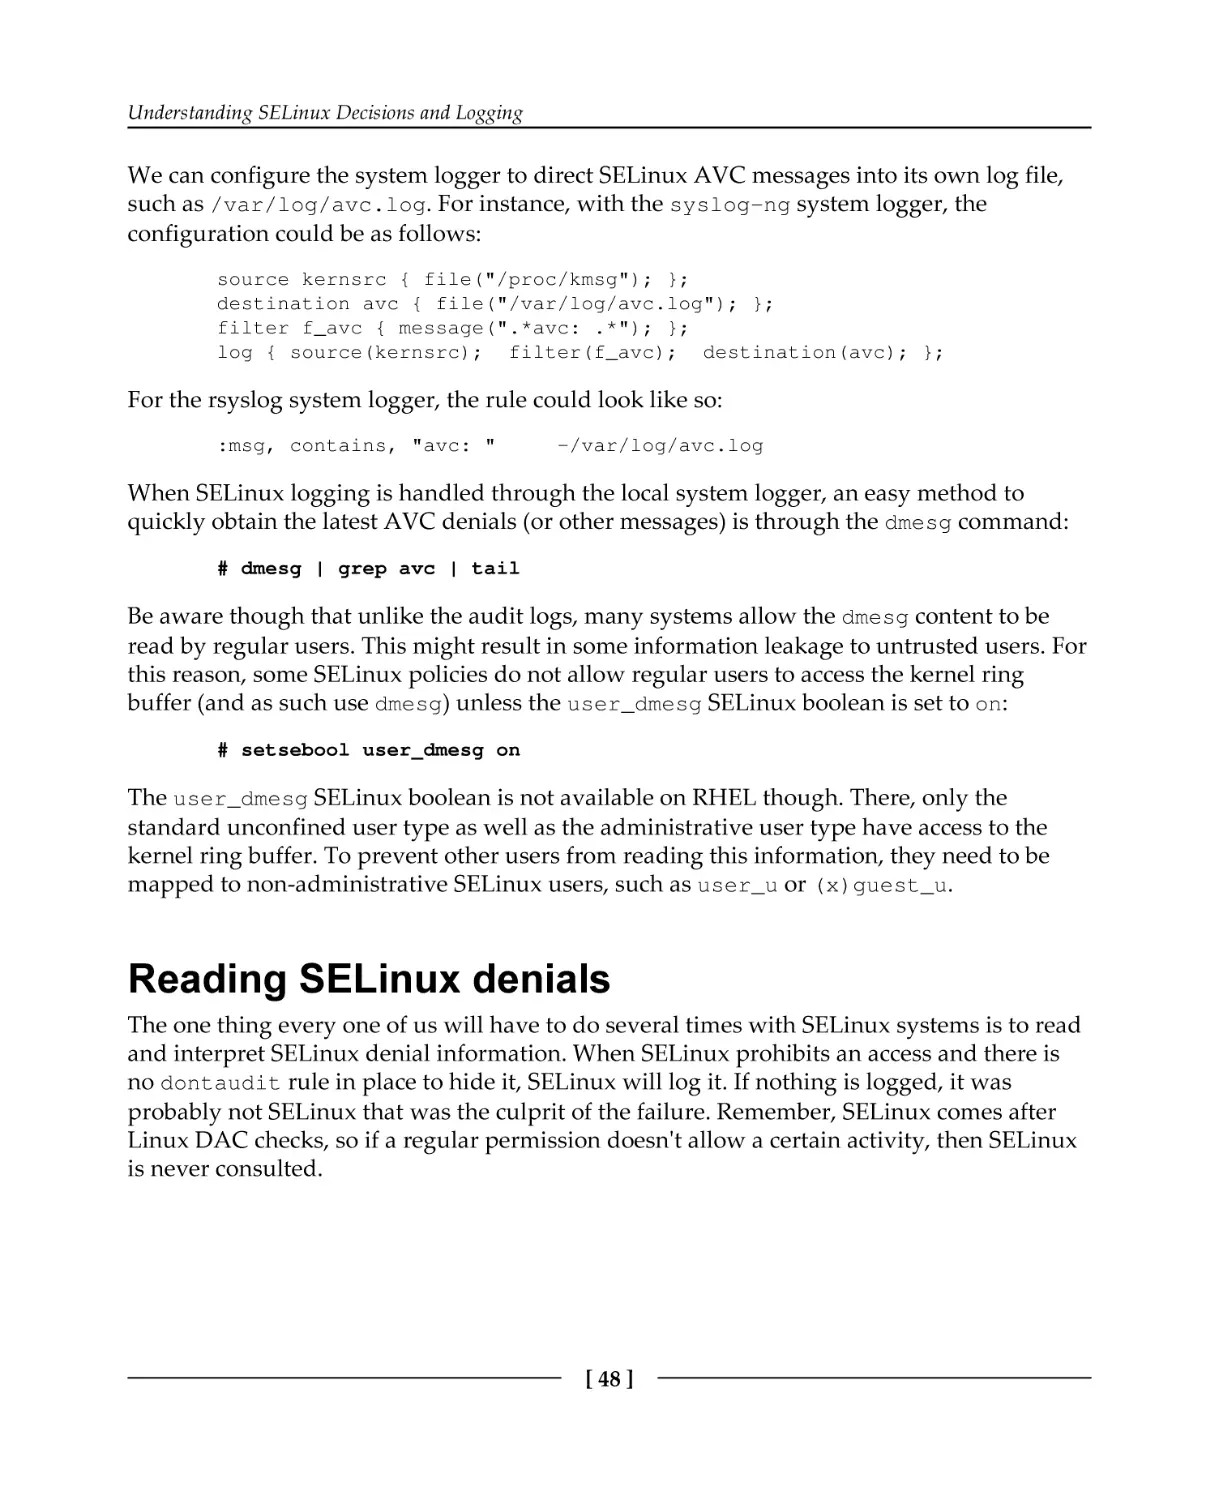 Reading SELinux denials